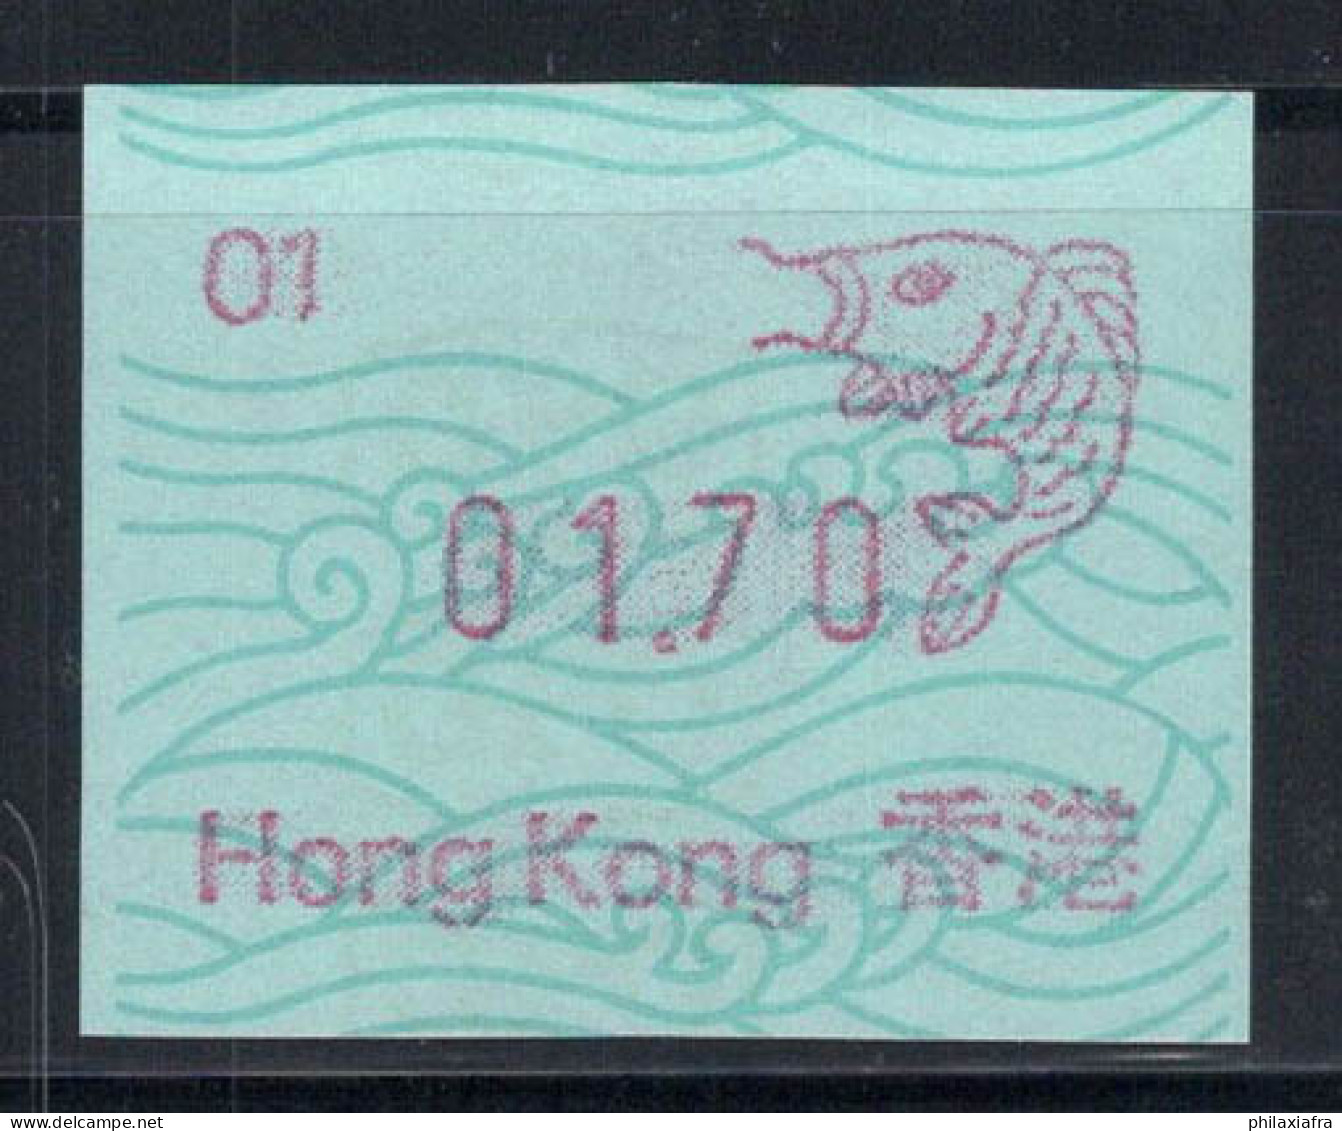 Hong Kong 1986 Mi. 1 Neuf ** 100% 01.70 - Distributori